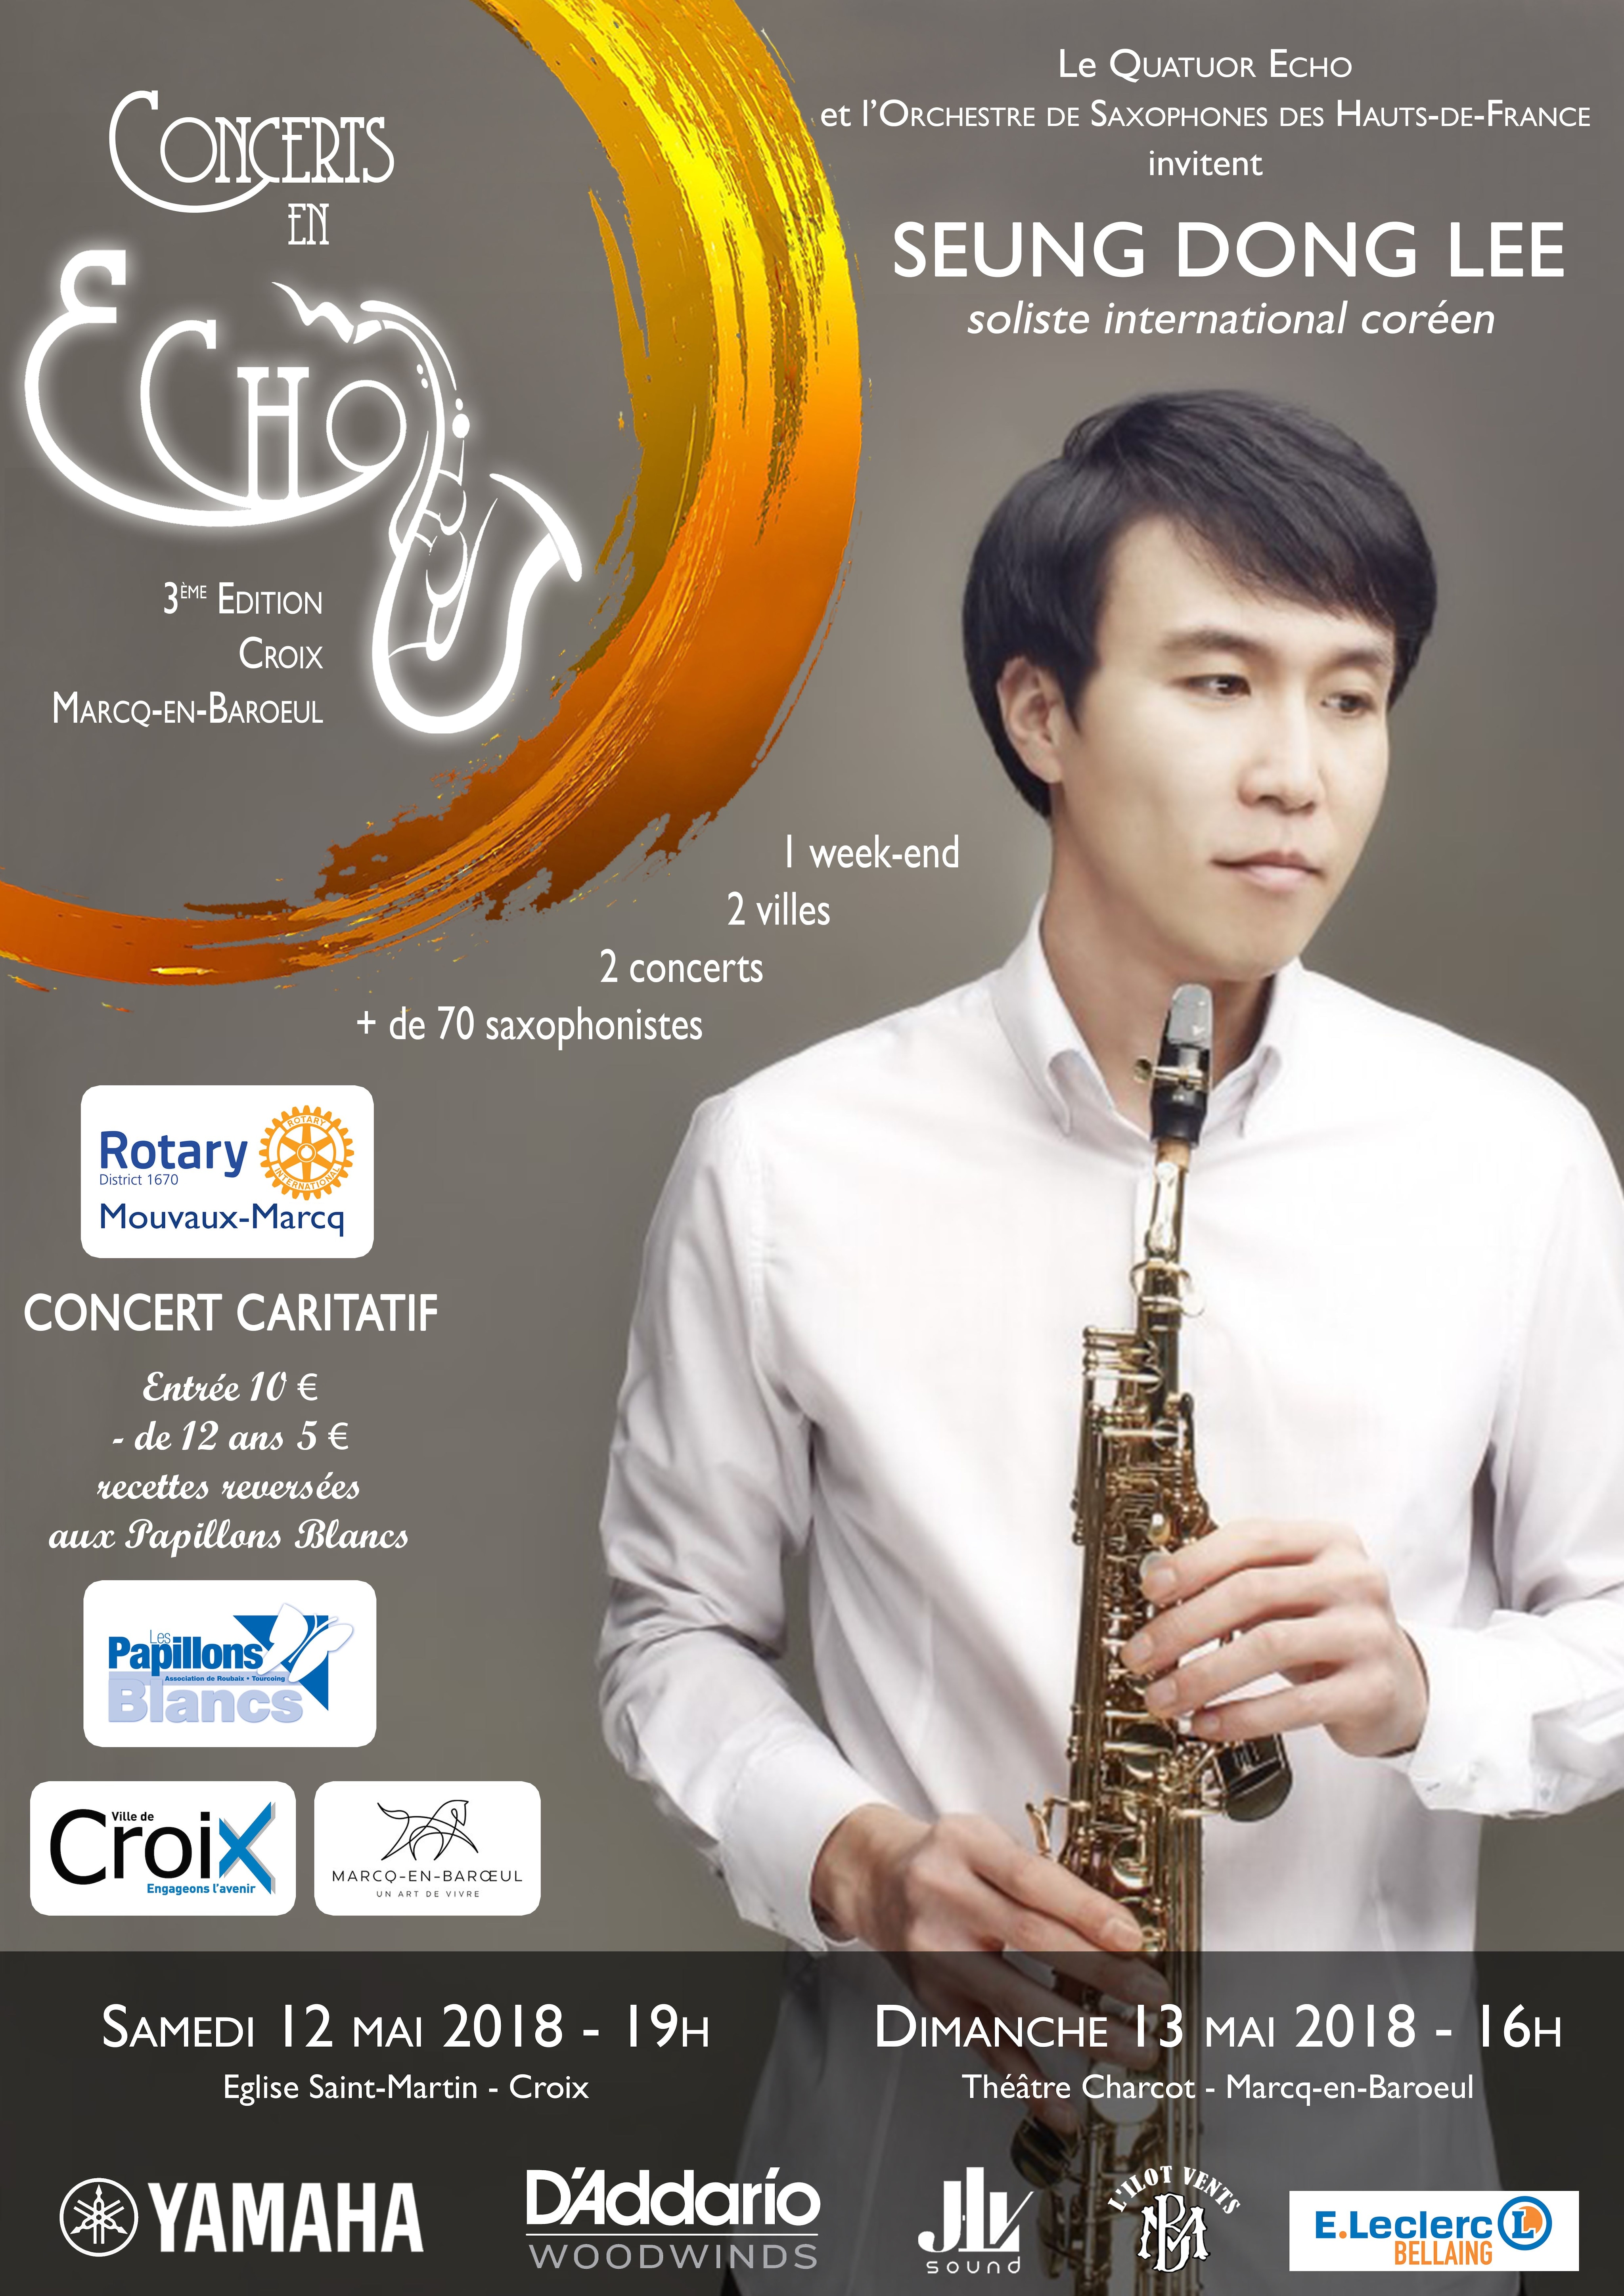 Concert caritatif de L’Orchestre de Saxophones des Hauts-de-France avec le Quatuor Echo et le soliste international Seung Dong Lee.